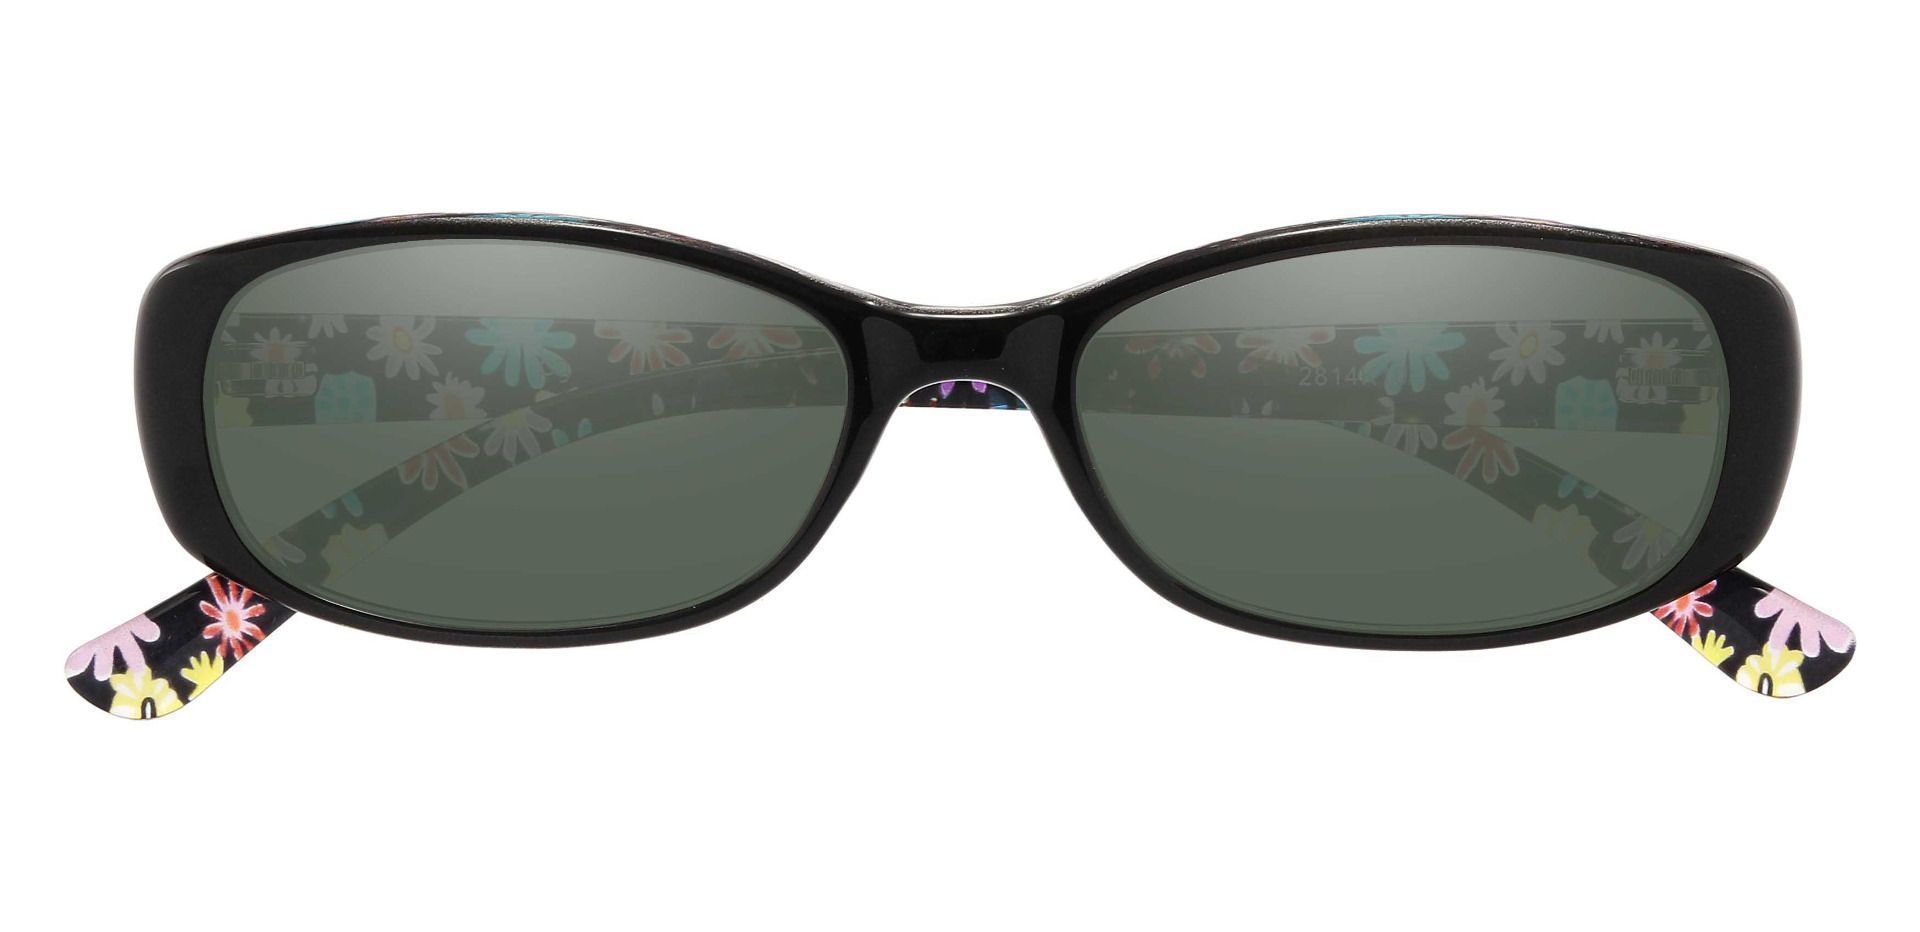 Bethesda Rectangle Prescription Sunglasses - Black Frame With Green Lenses